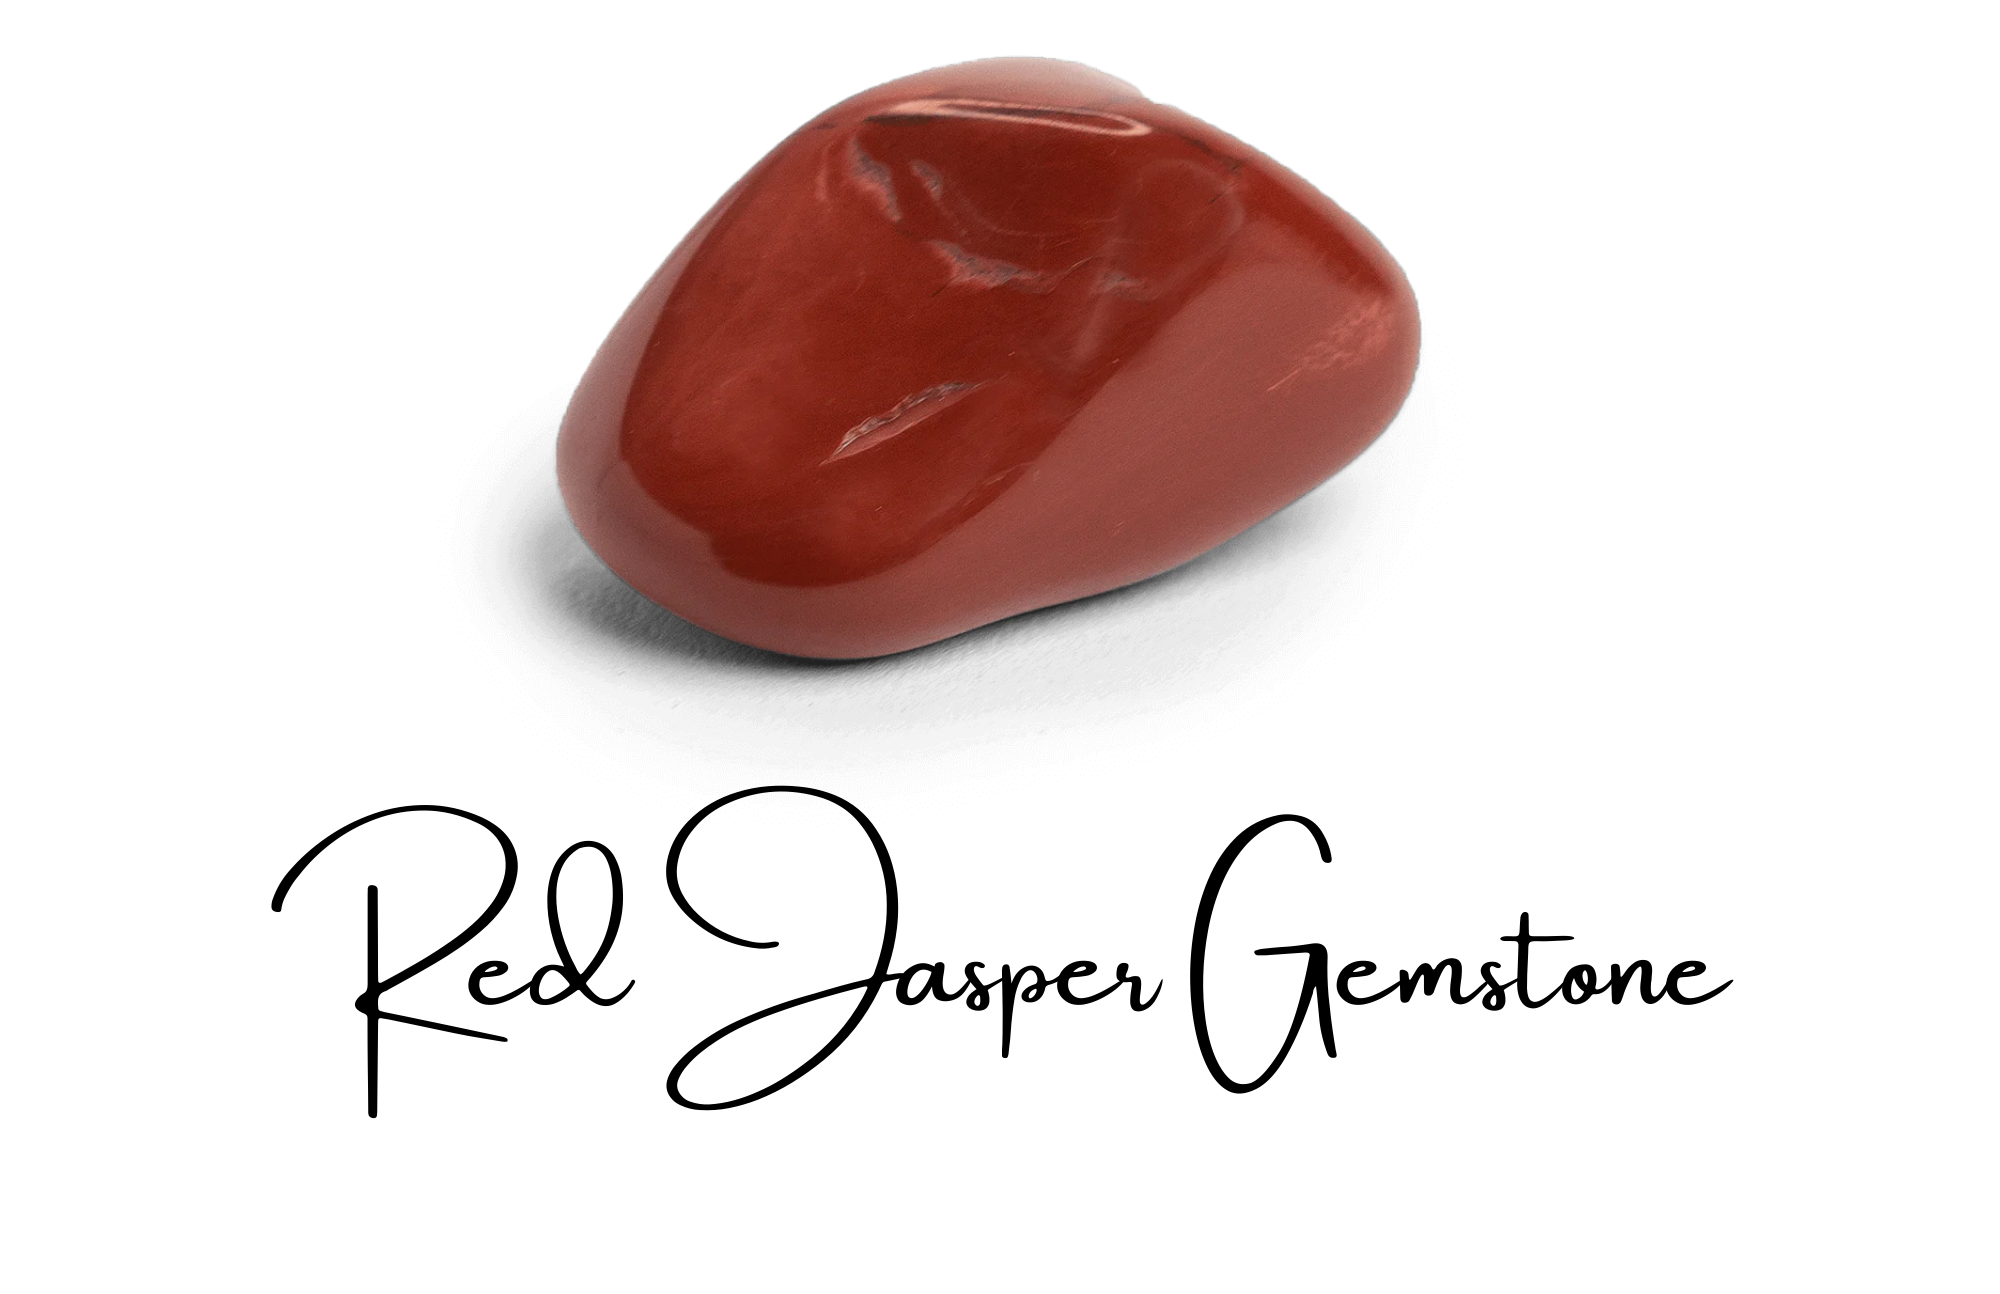 A pastel red jasper stone